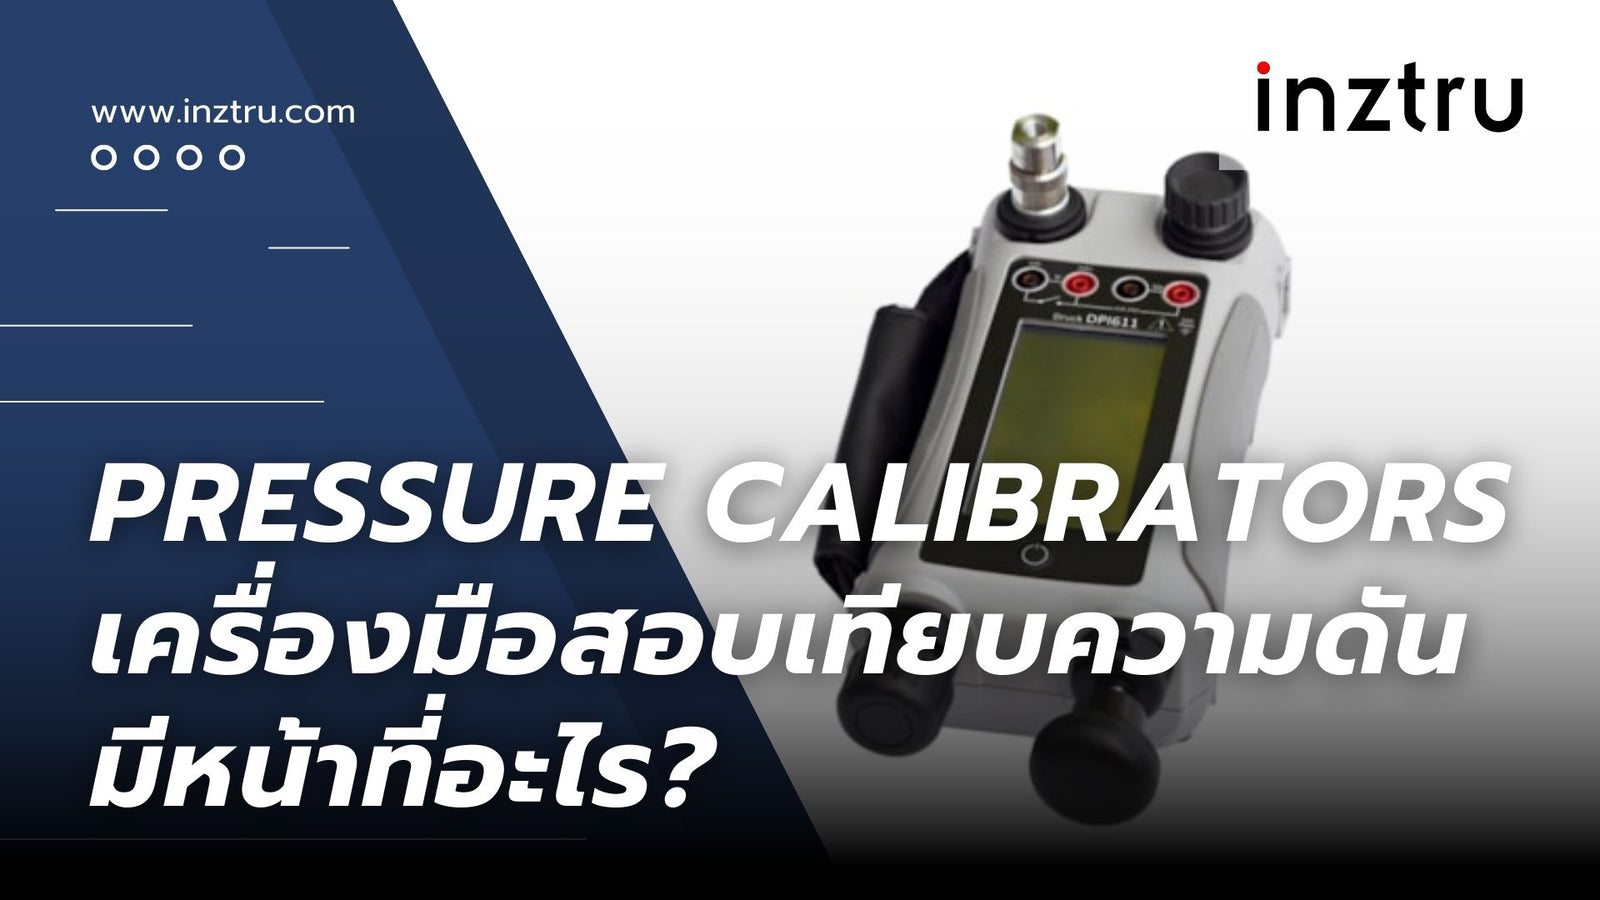 Pressure Calibrators เครื่องมือสอบเทียบความดัน : มีหน้าที่อะไร?